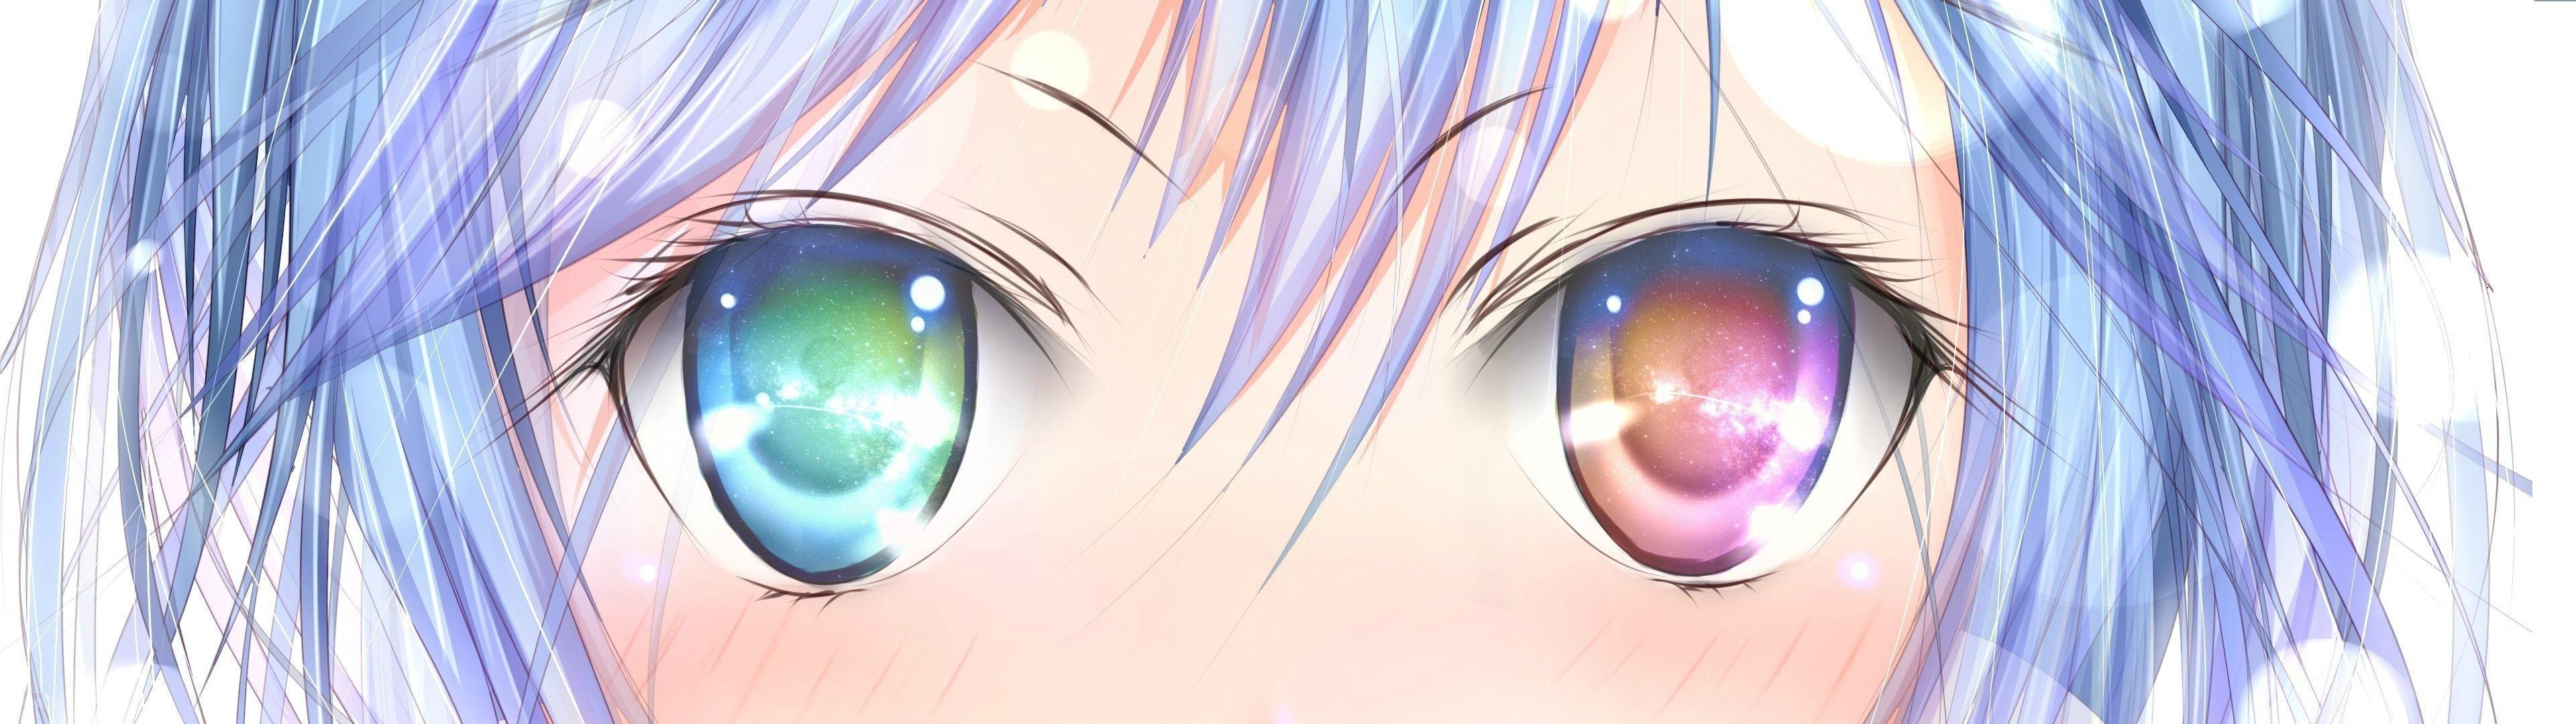 anime girl eyes